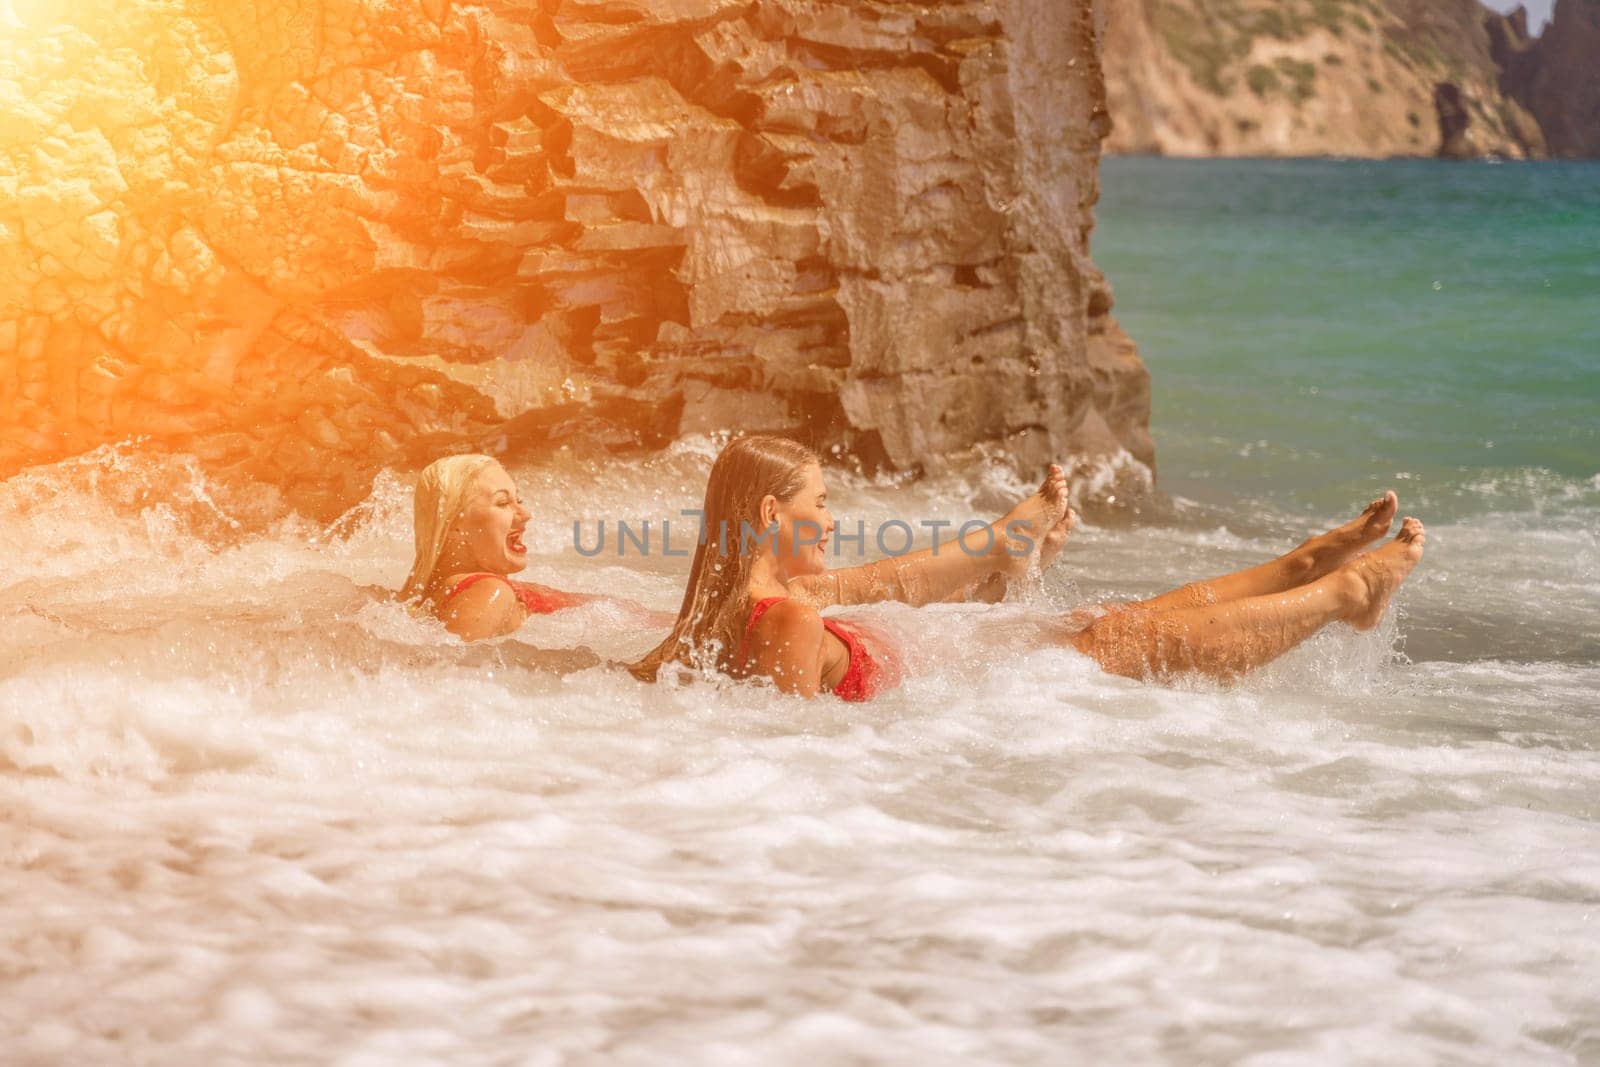 Women ocean play. Seaside, beach daytime, enjoying beach fun. Two women in red swimsuits enjoying themselves in the ocean waves. by Matiunina